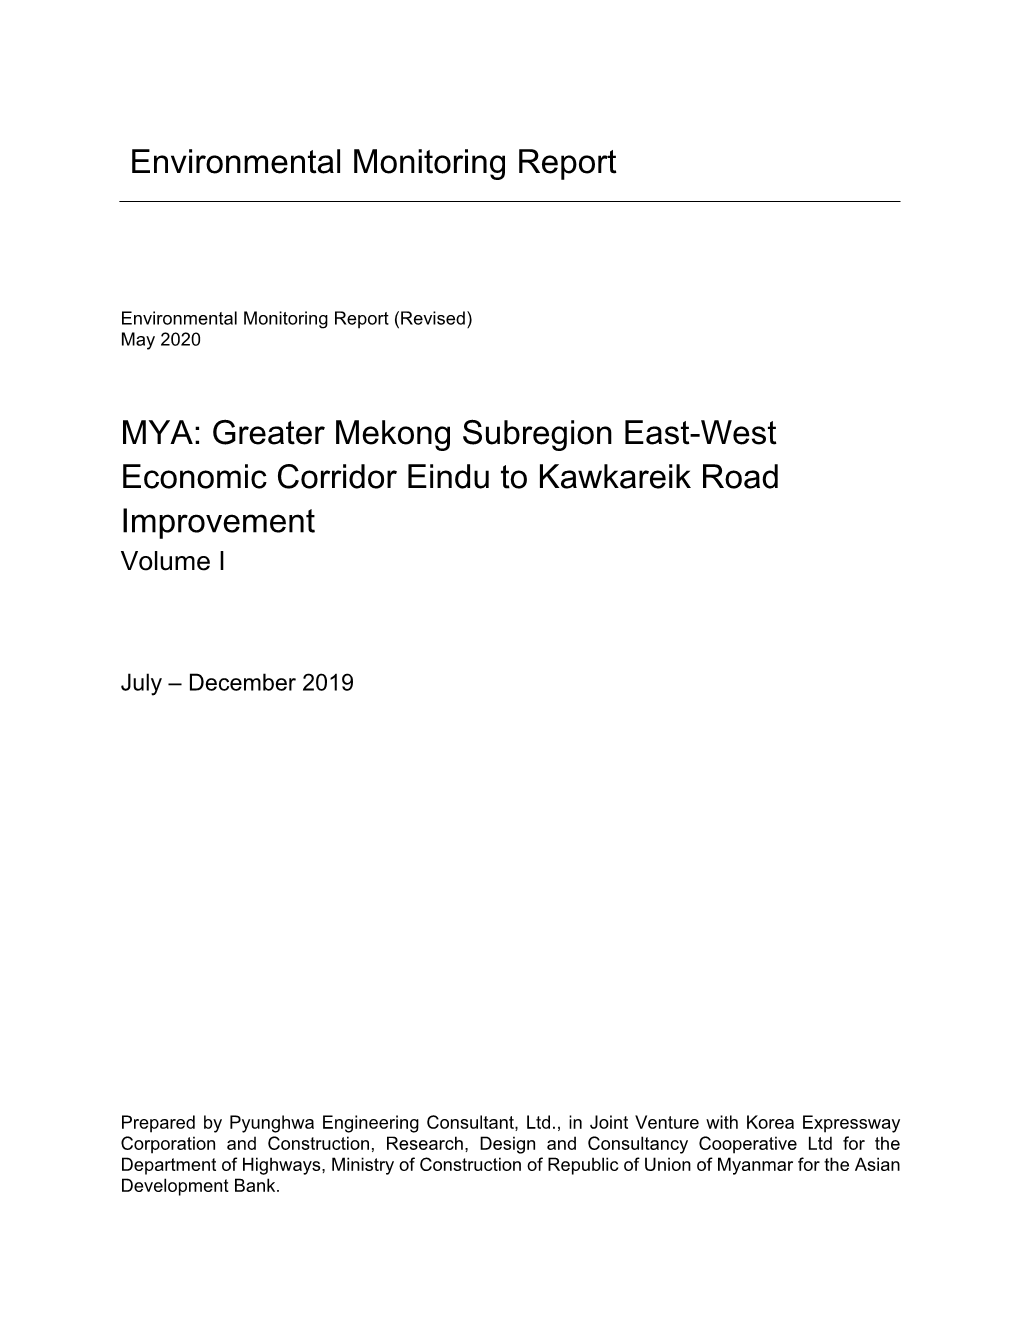 46422-003: Greater Mekong Subregion East–West Economic Corridor Eindu to Kawkareik Road Improvement Project